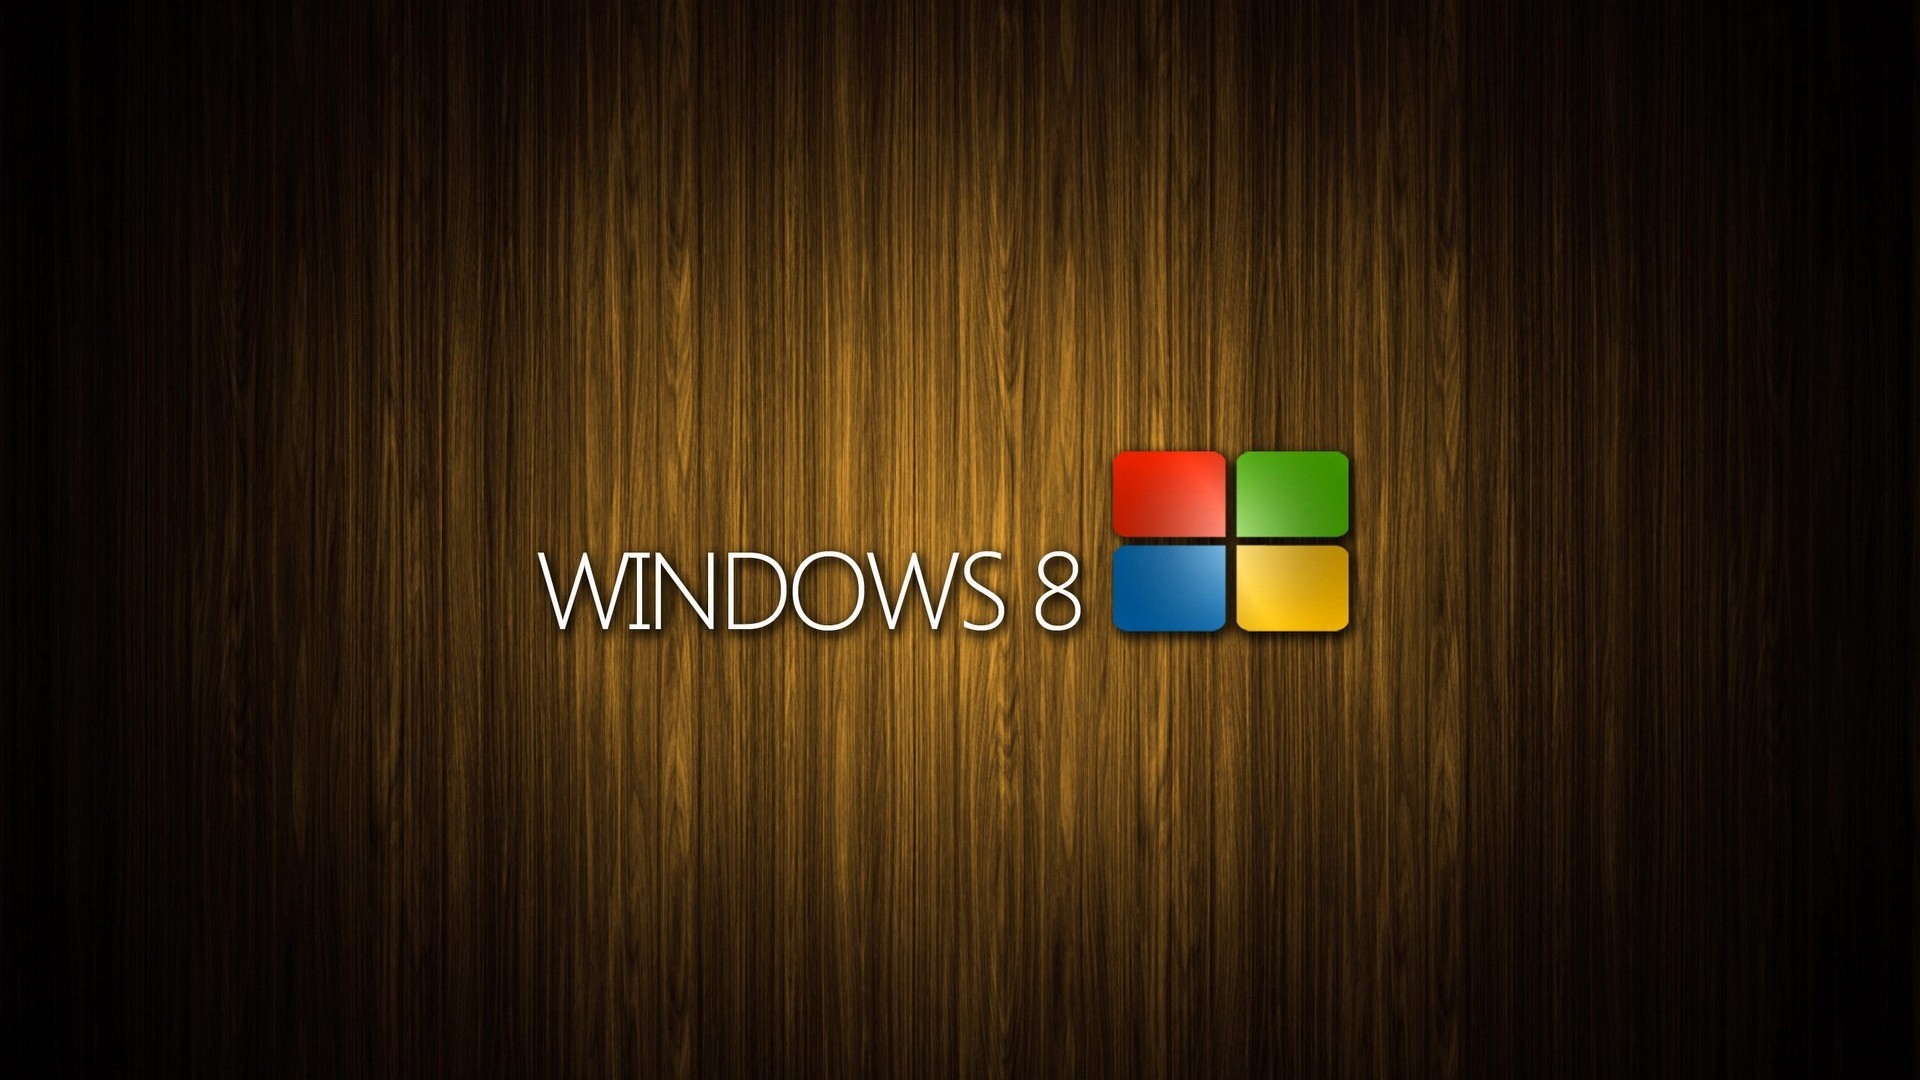 Microsoft Windows 8 Logo for 1920 x 1080 HDTV 1080p resolution